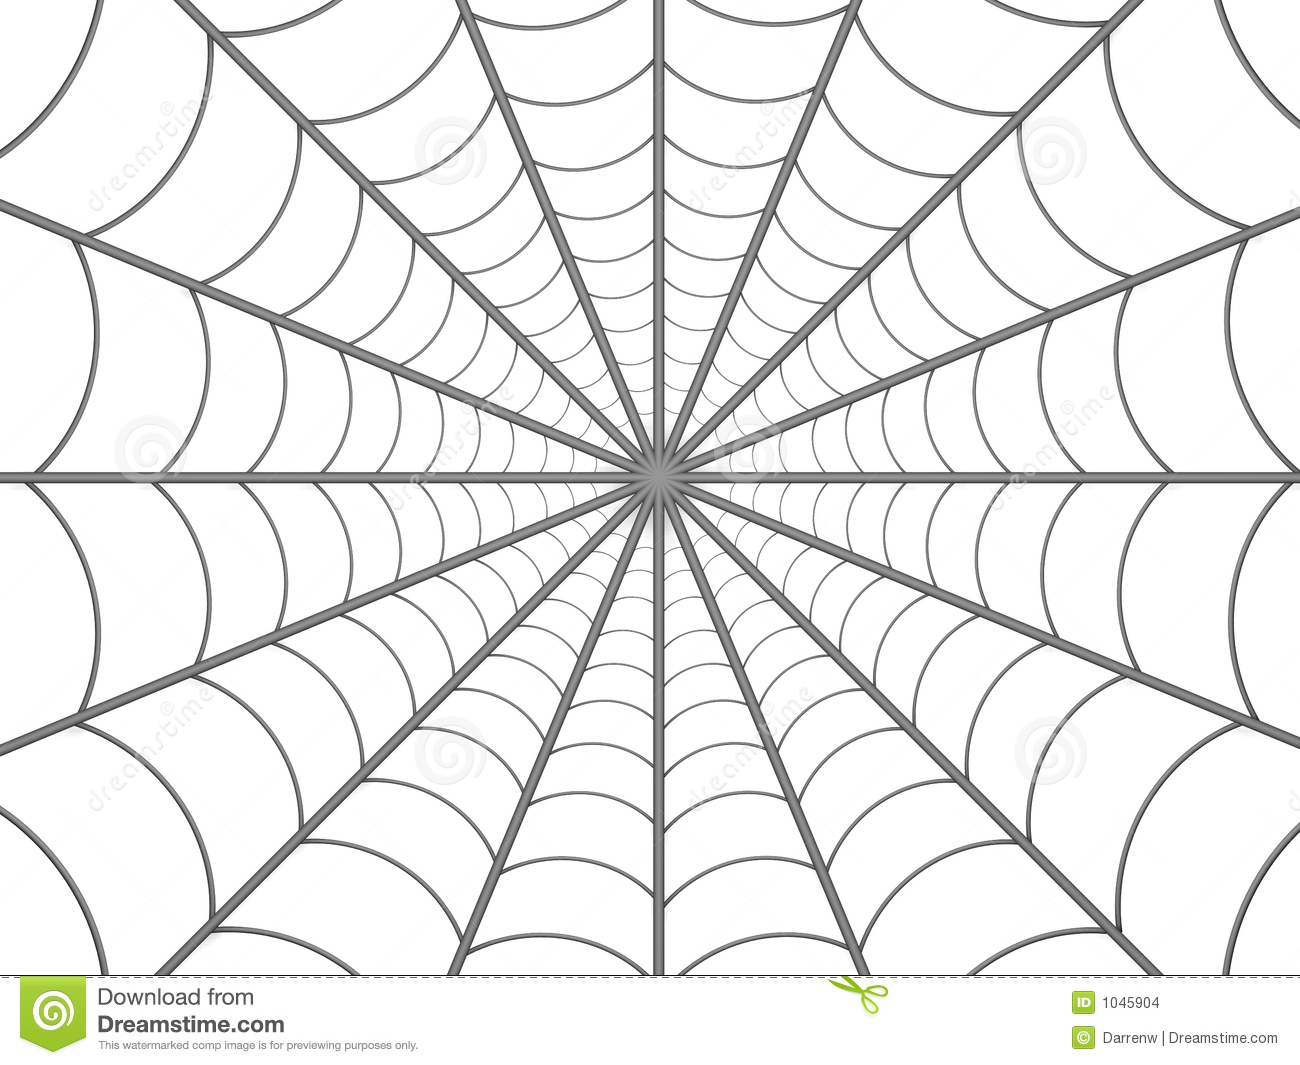 67+] Spider Web Backgrounds - WallpaperSafari